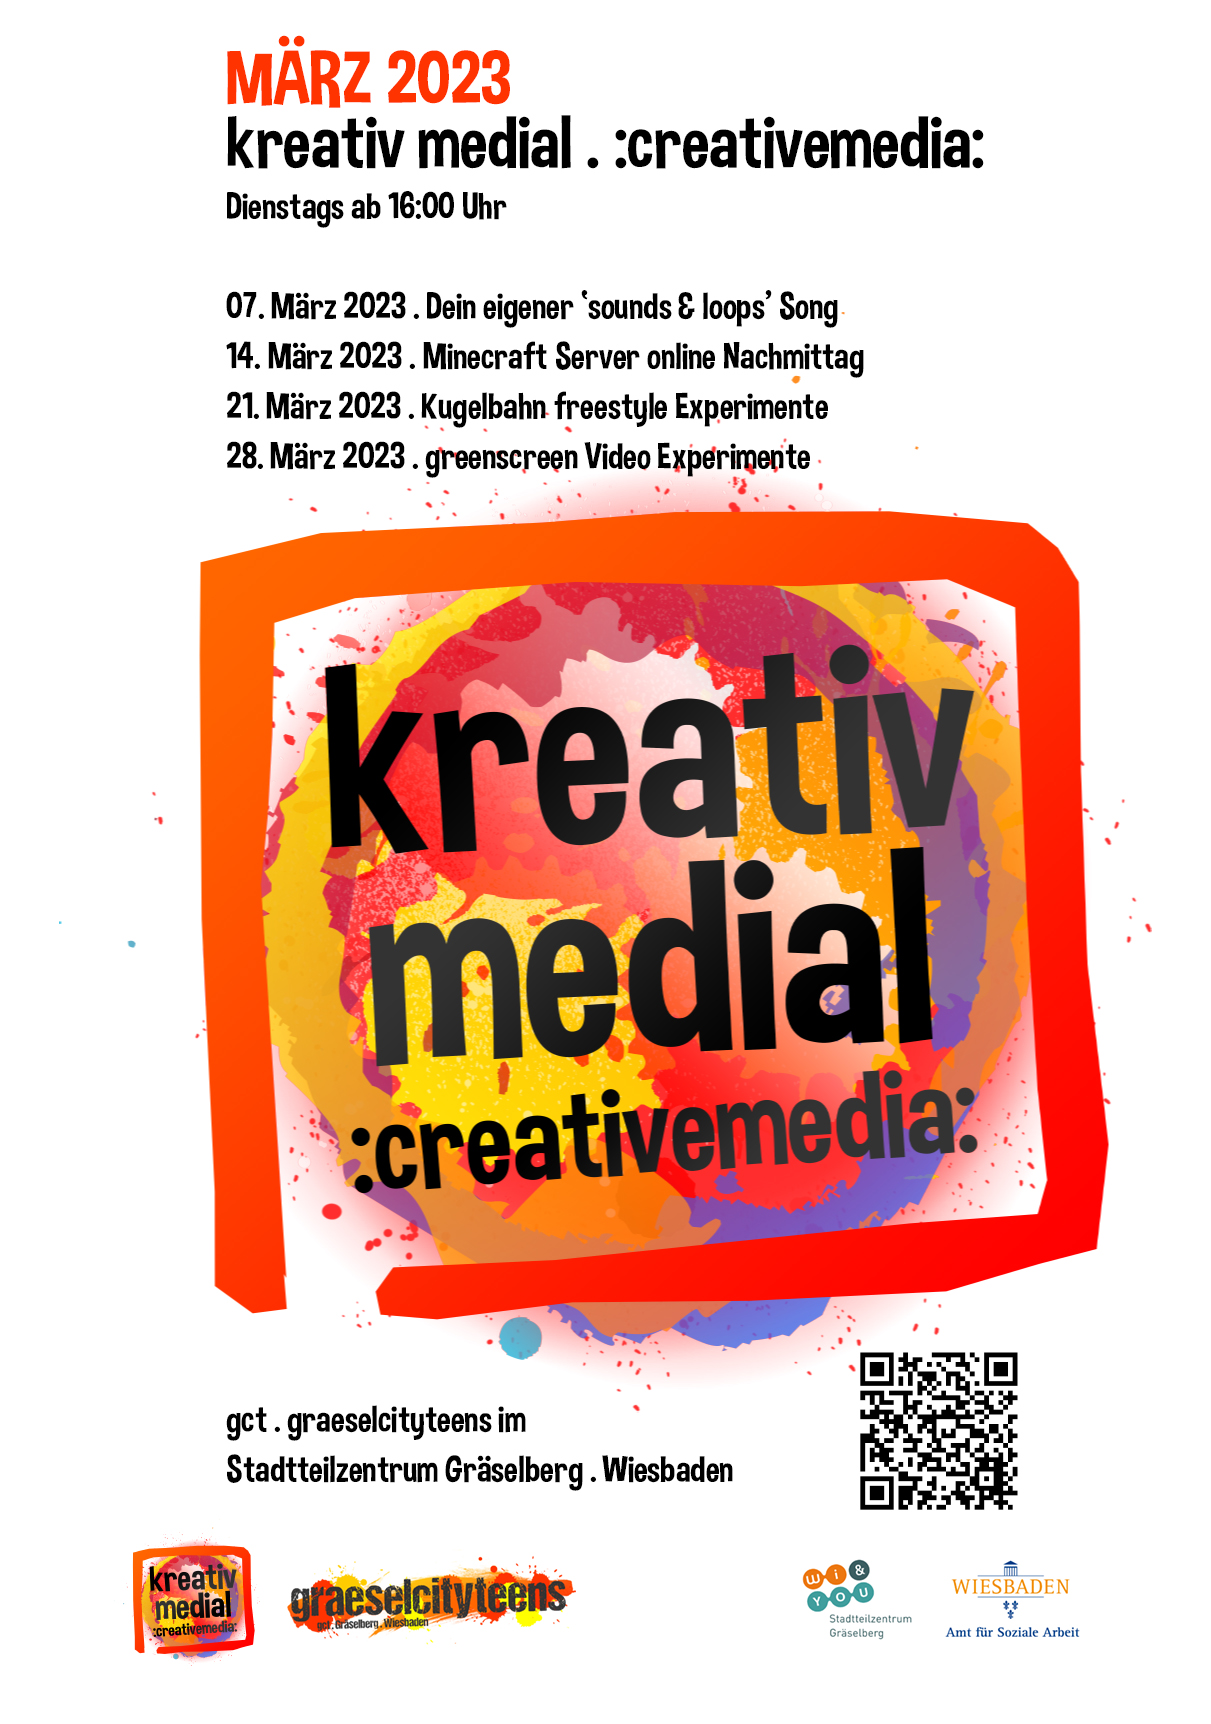 kreativ medial . MÃ¤rz 2023 . :creativemedia: . 7. MÃ¤rz 2023 . gct . graeselcityteens ...auf dem GrÃ¤selberg . Stadtteilzentrum GrÃ¤selberg . Wiesbaden